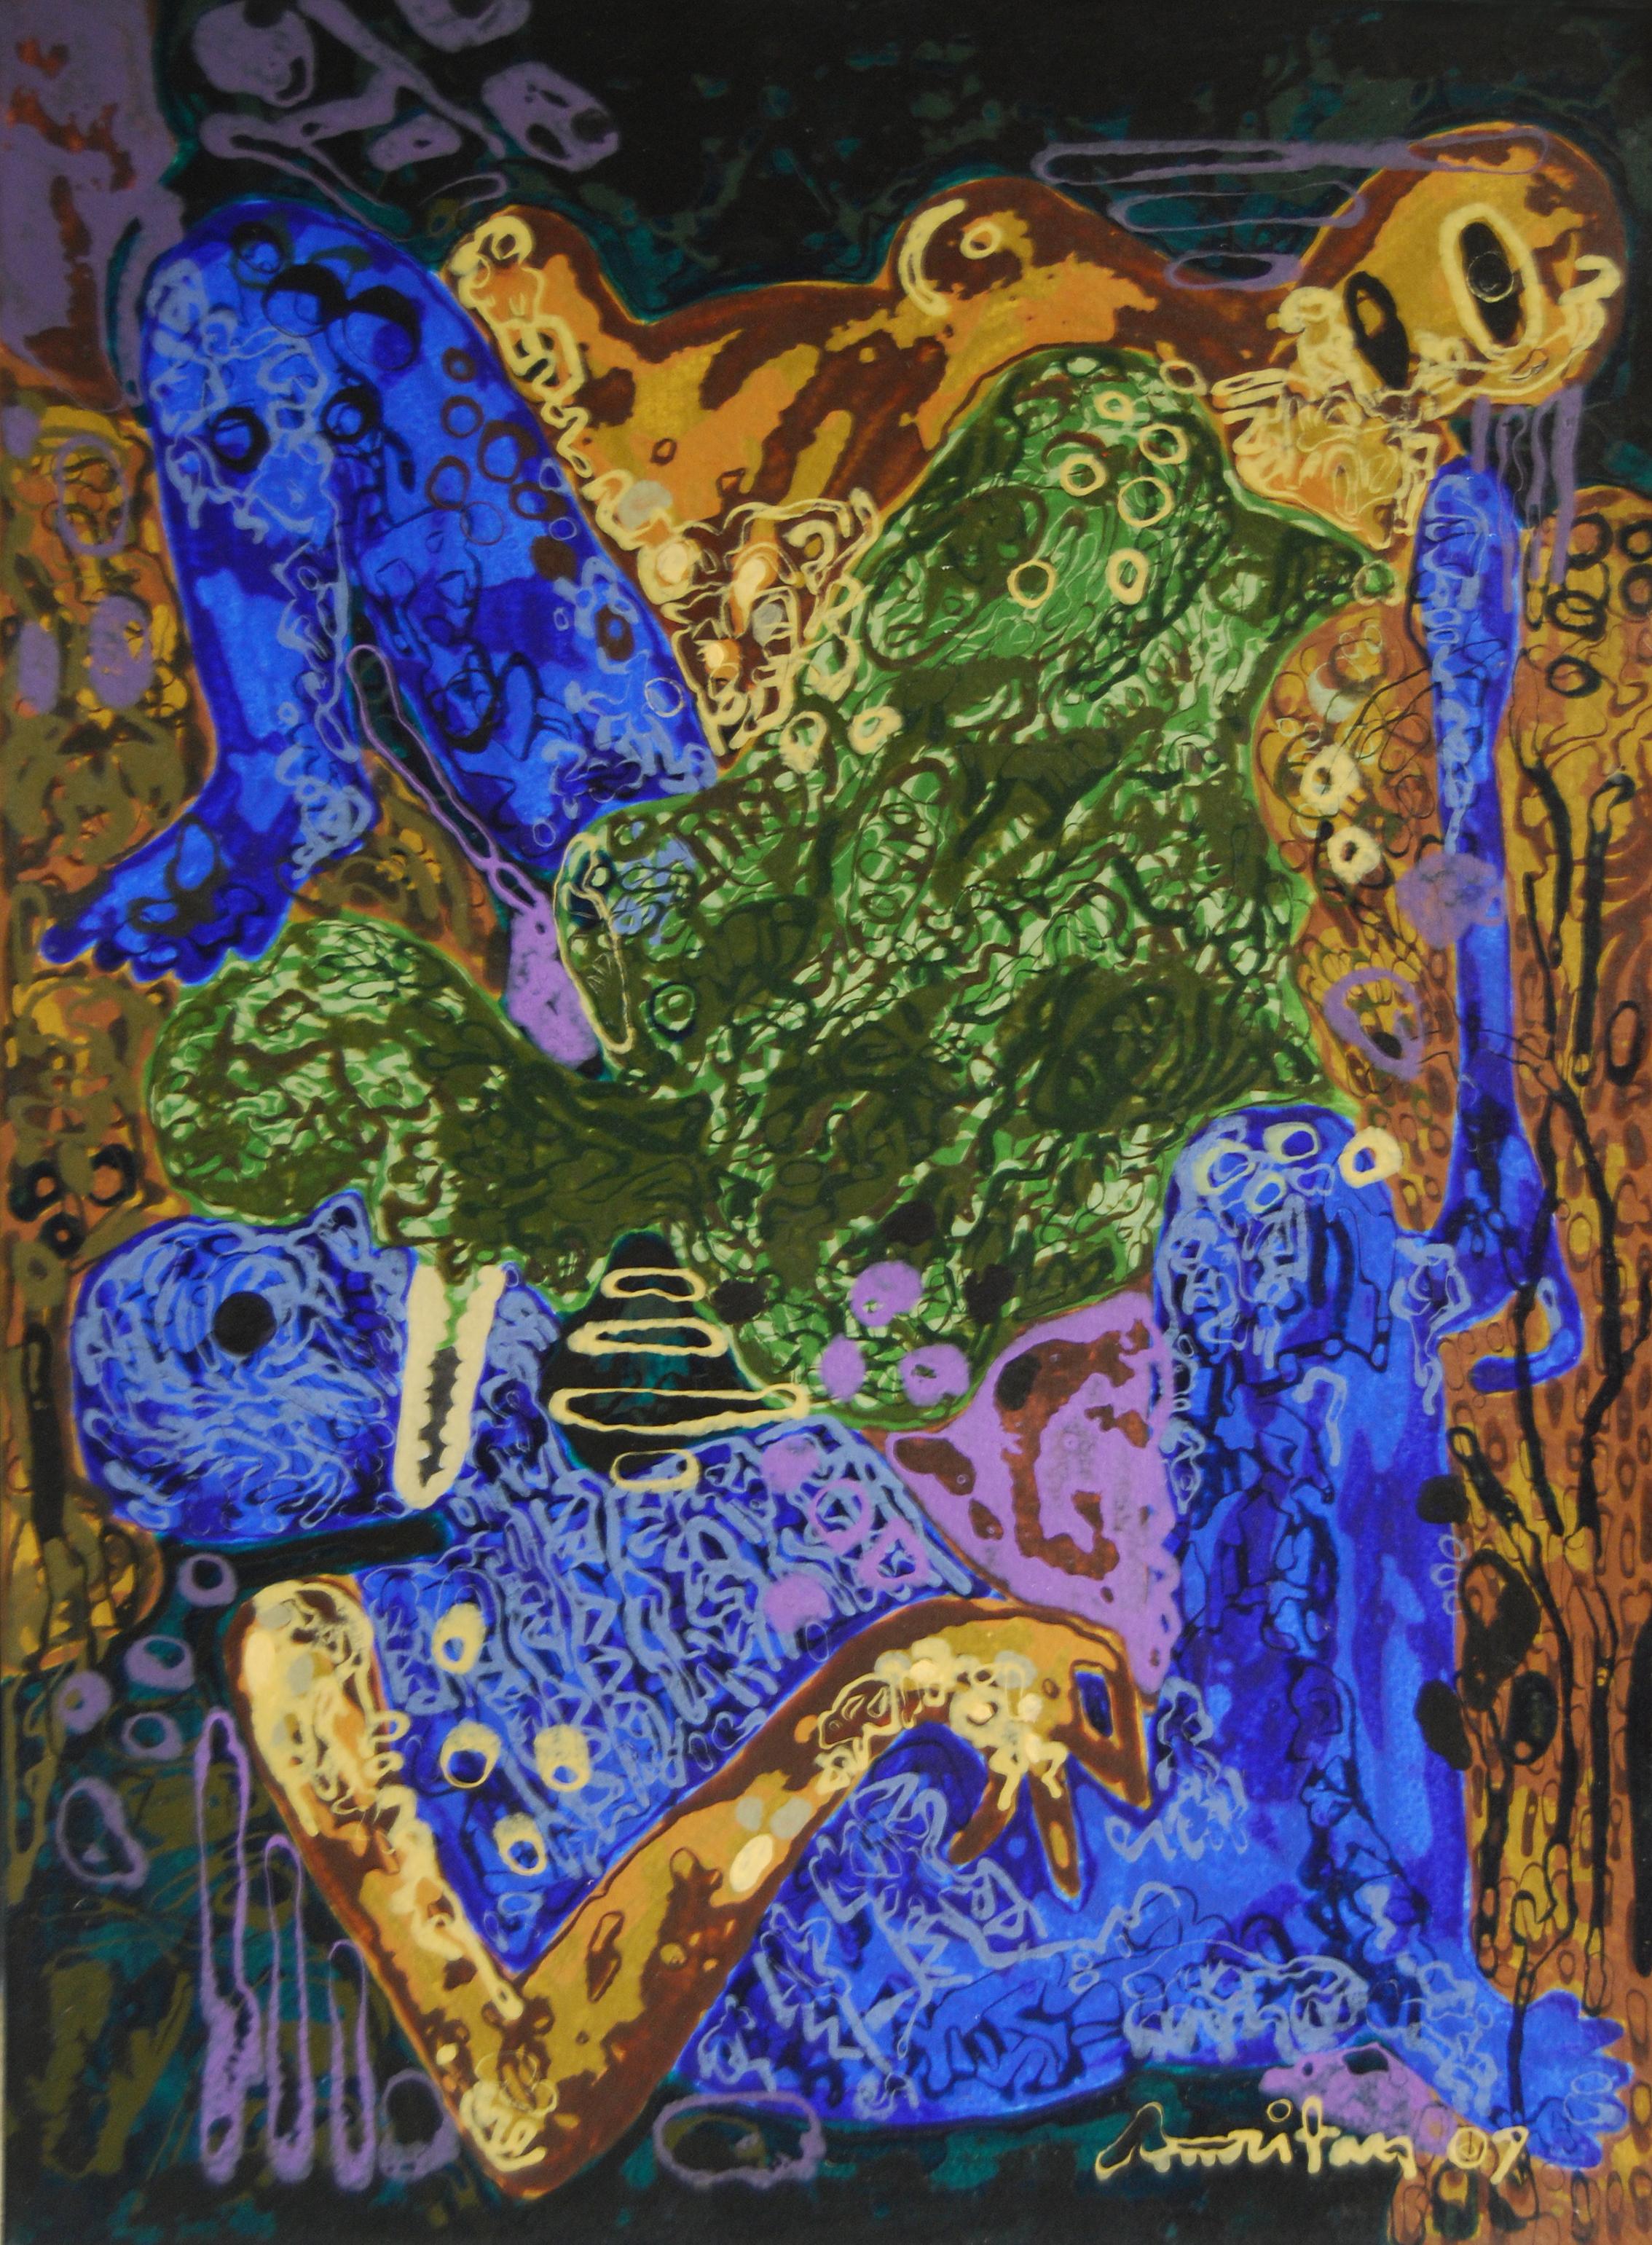 Abstract Painting Amritam Das - Peinture, acrylique, couleur bleu vert brun, artiste contemporain indien « en stock »